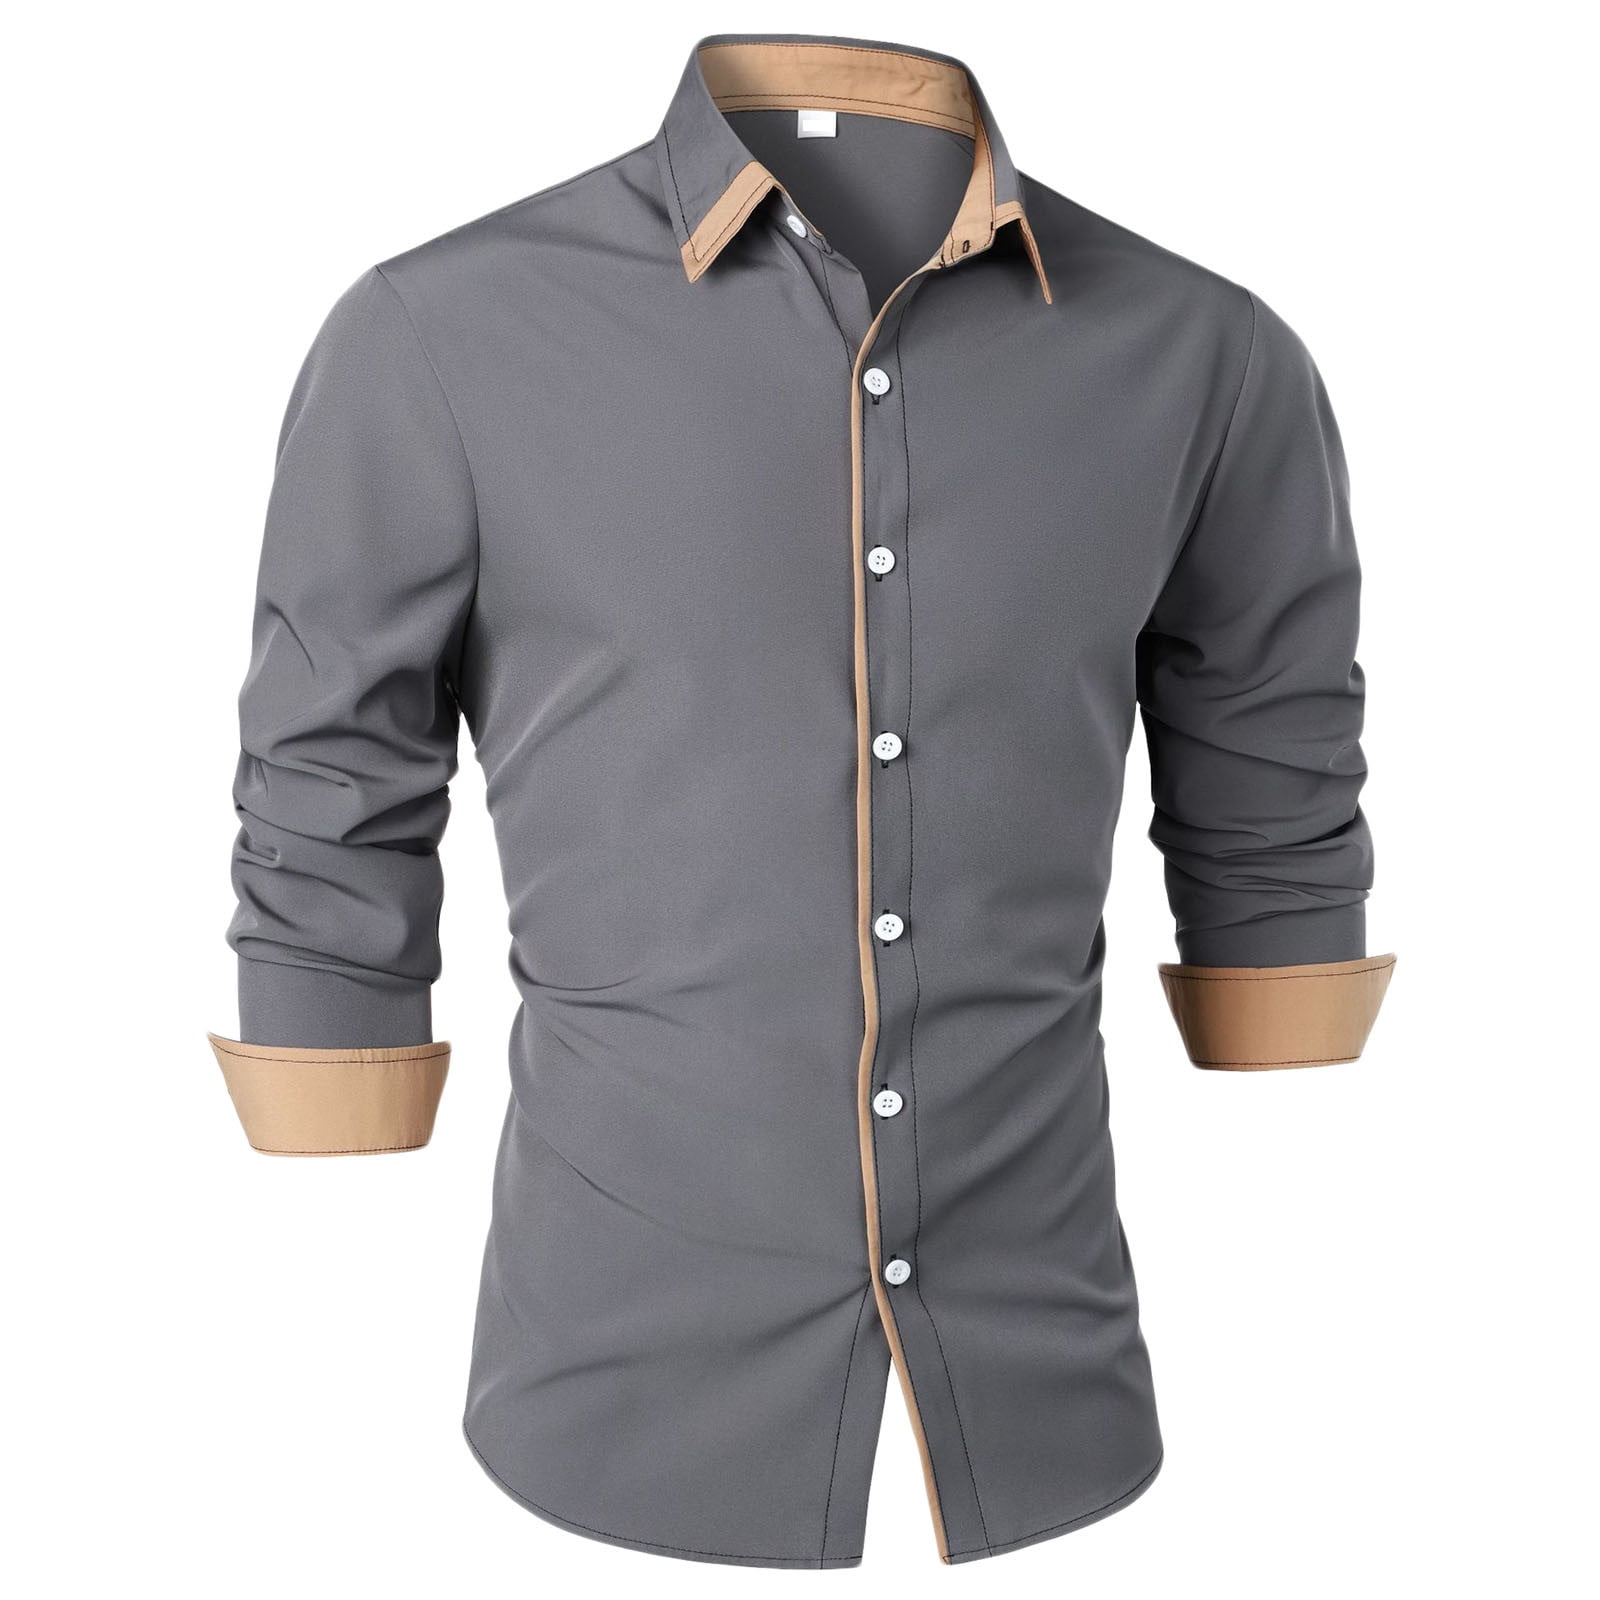 APEXFWDT Men's Long Sleeve Dress Shirt Plaid Collar Casual Button Down ...